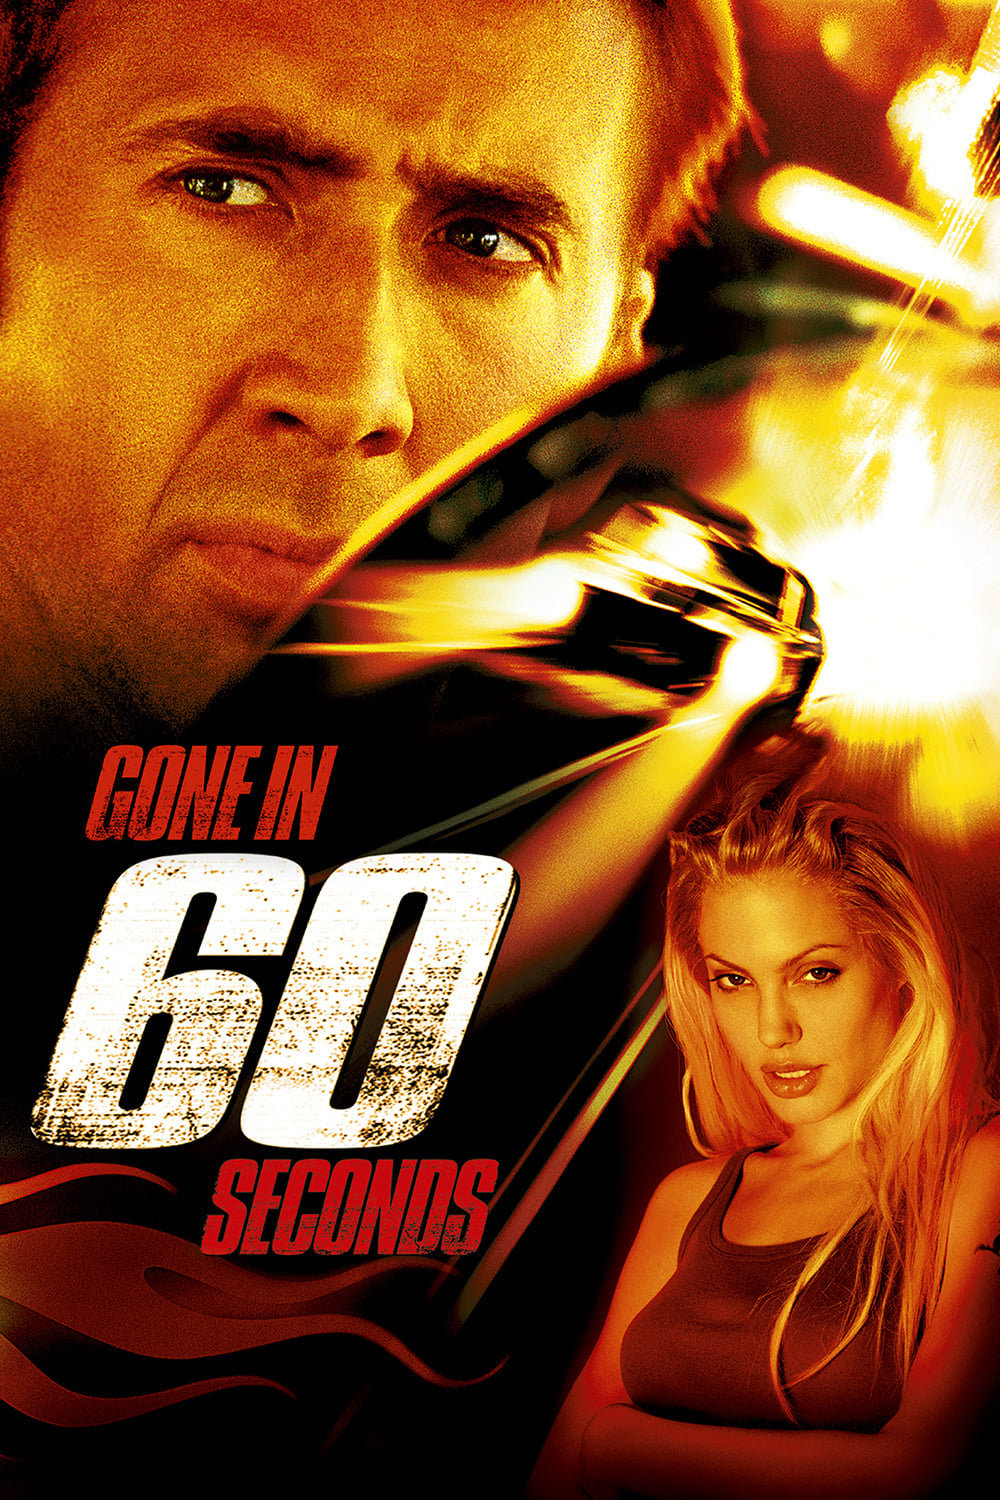 60 secondes chrono (2000)